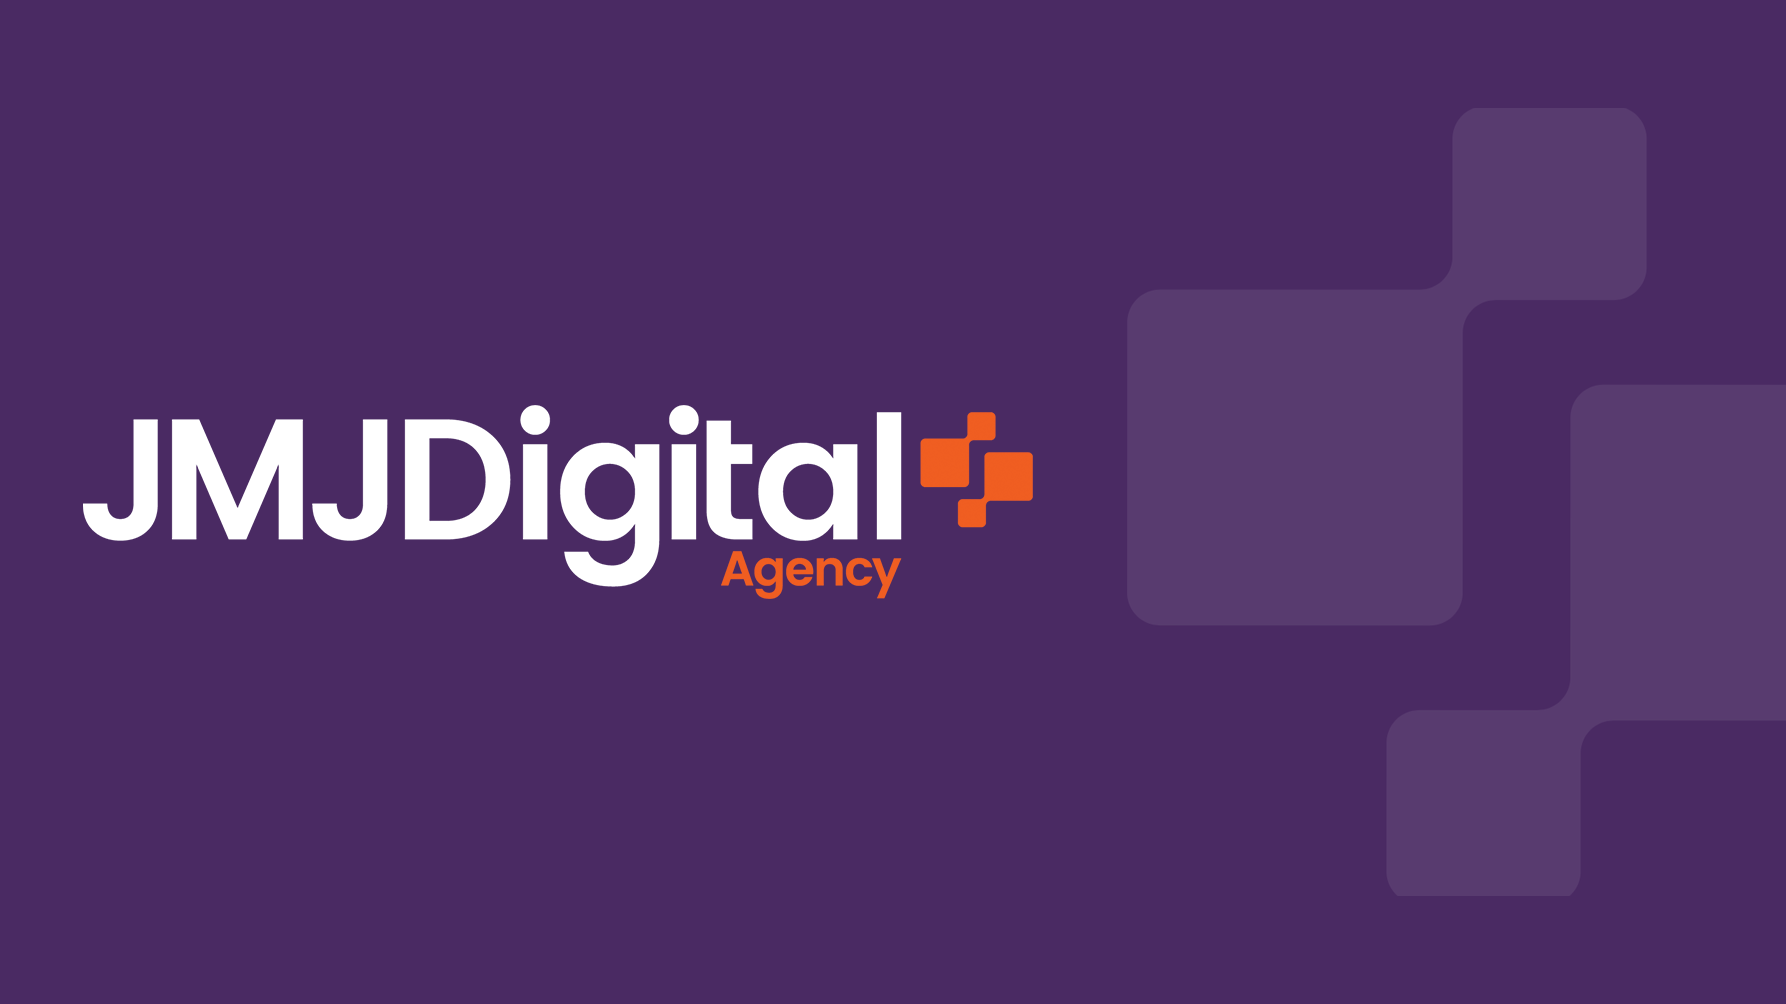 JMJ Digital Agency new brand